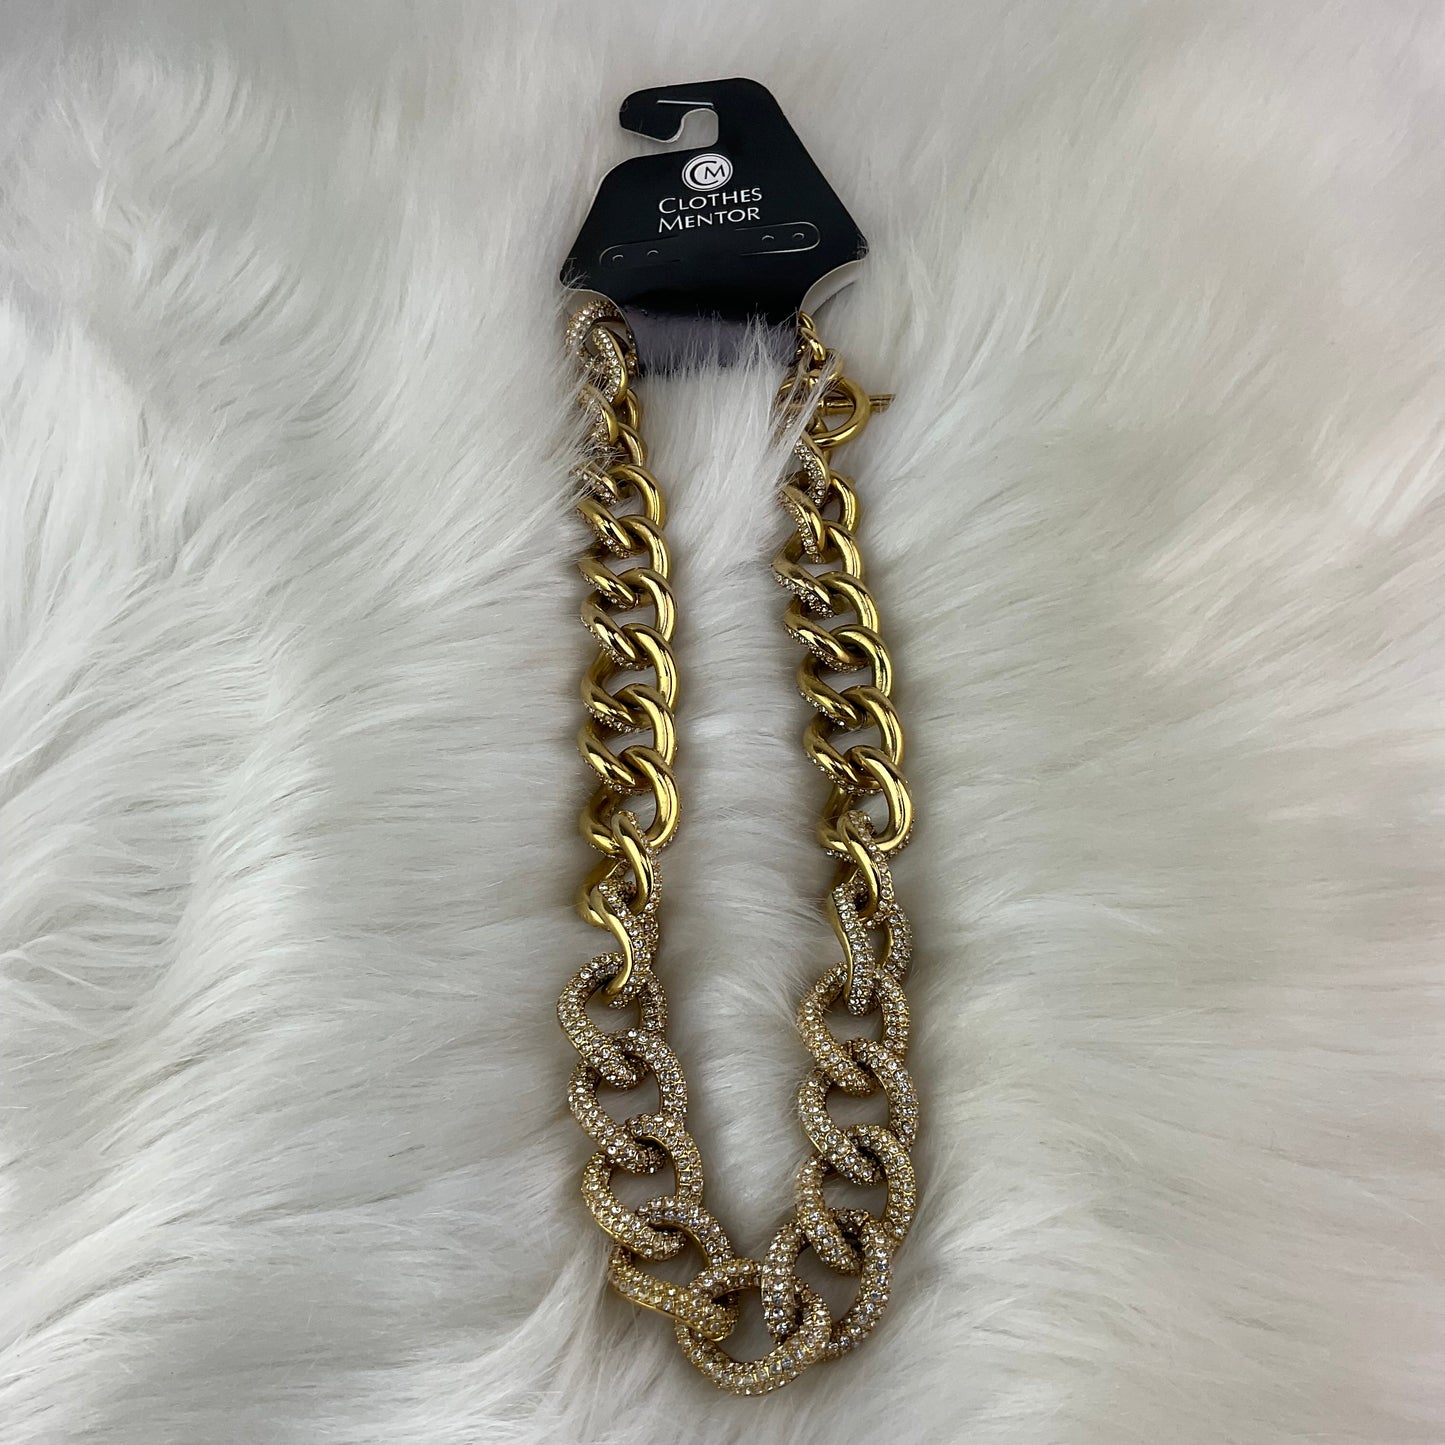 Necklace Chain Michael Kors